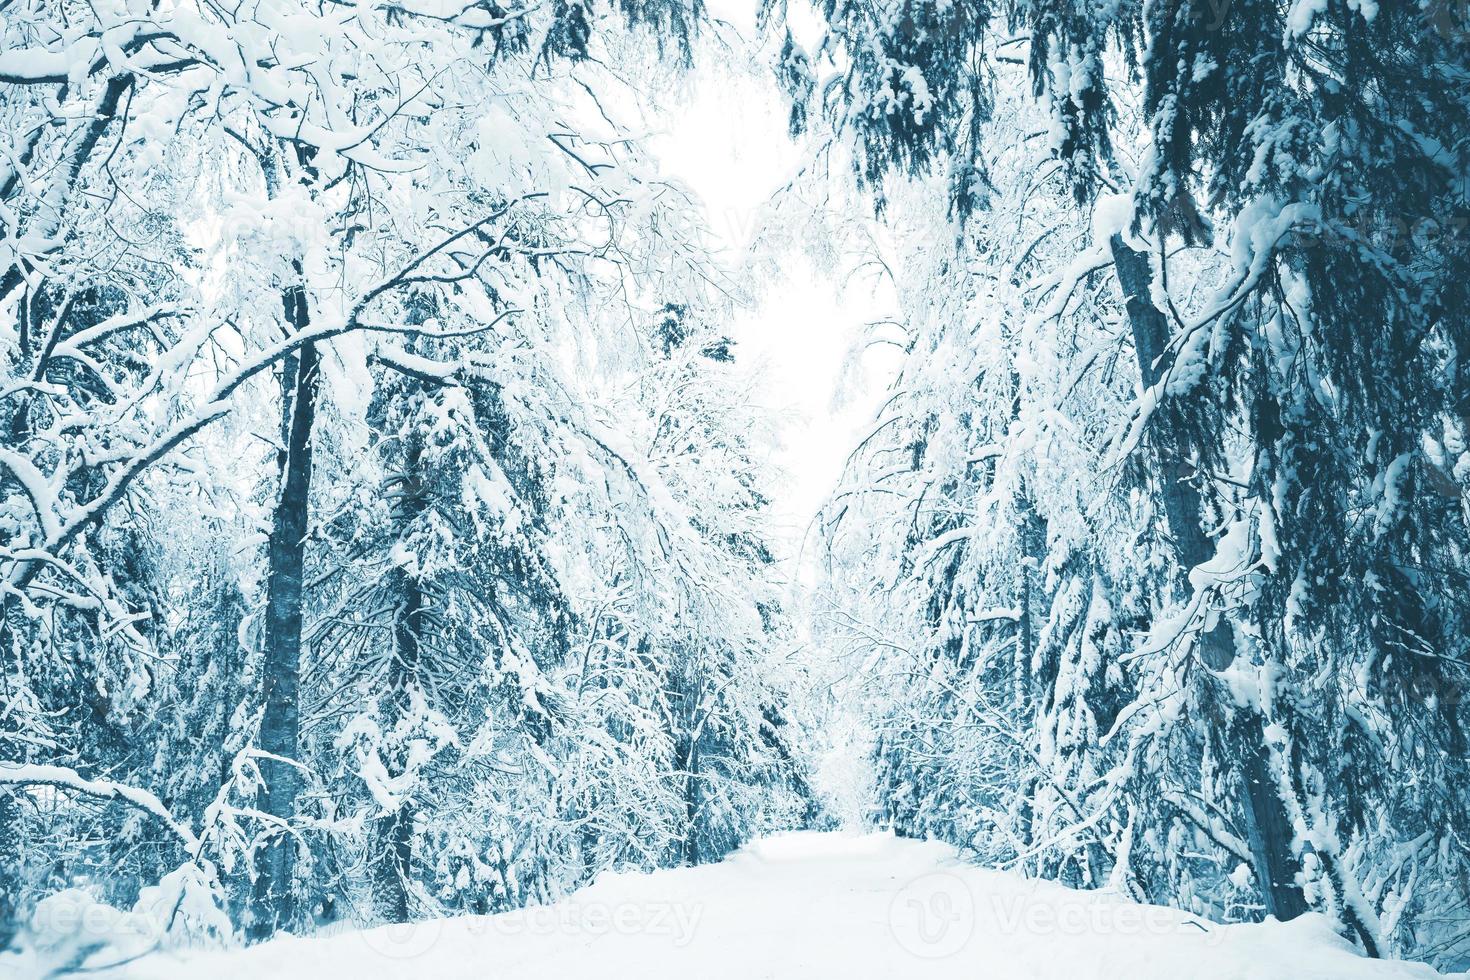 Russian Winter Beauty Nature  Free photo on Pixabay  Pixabay